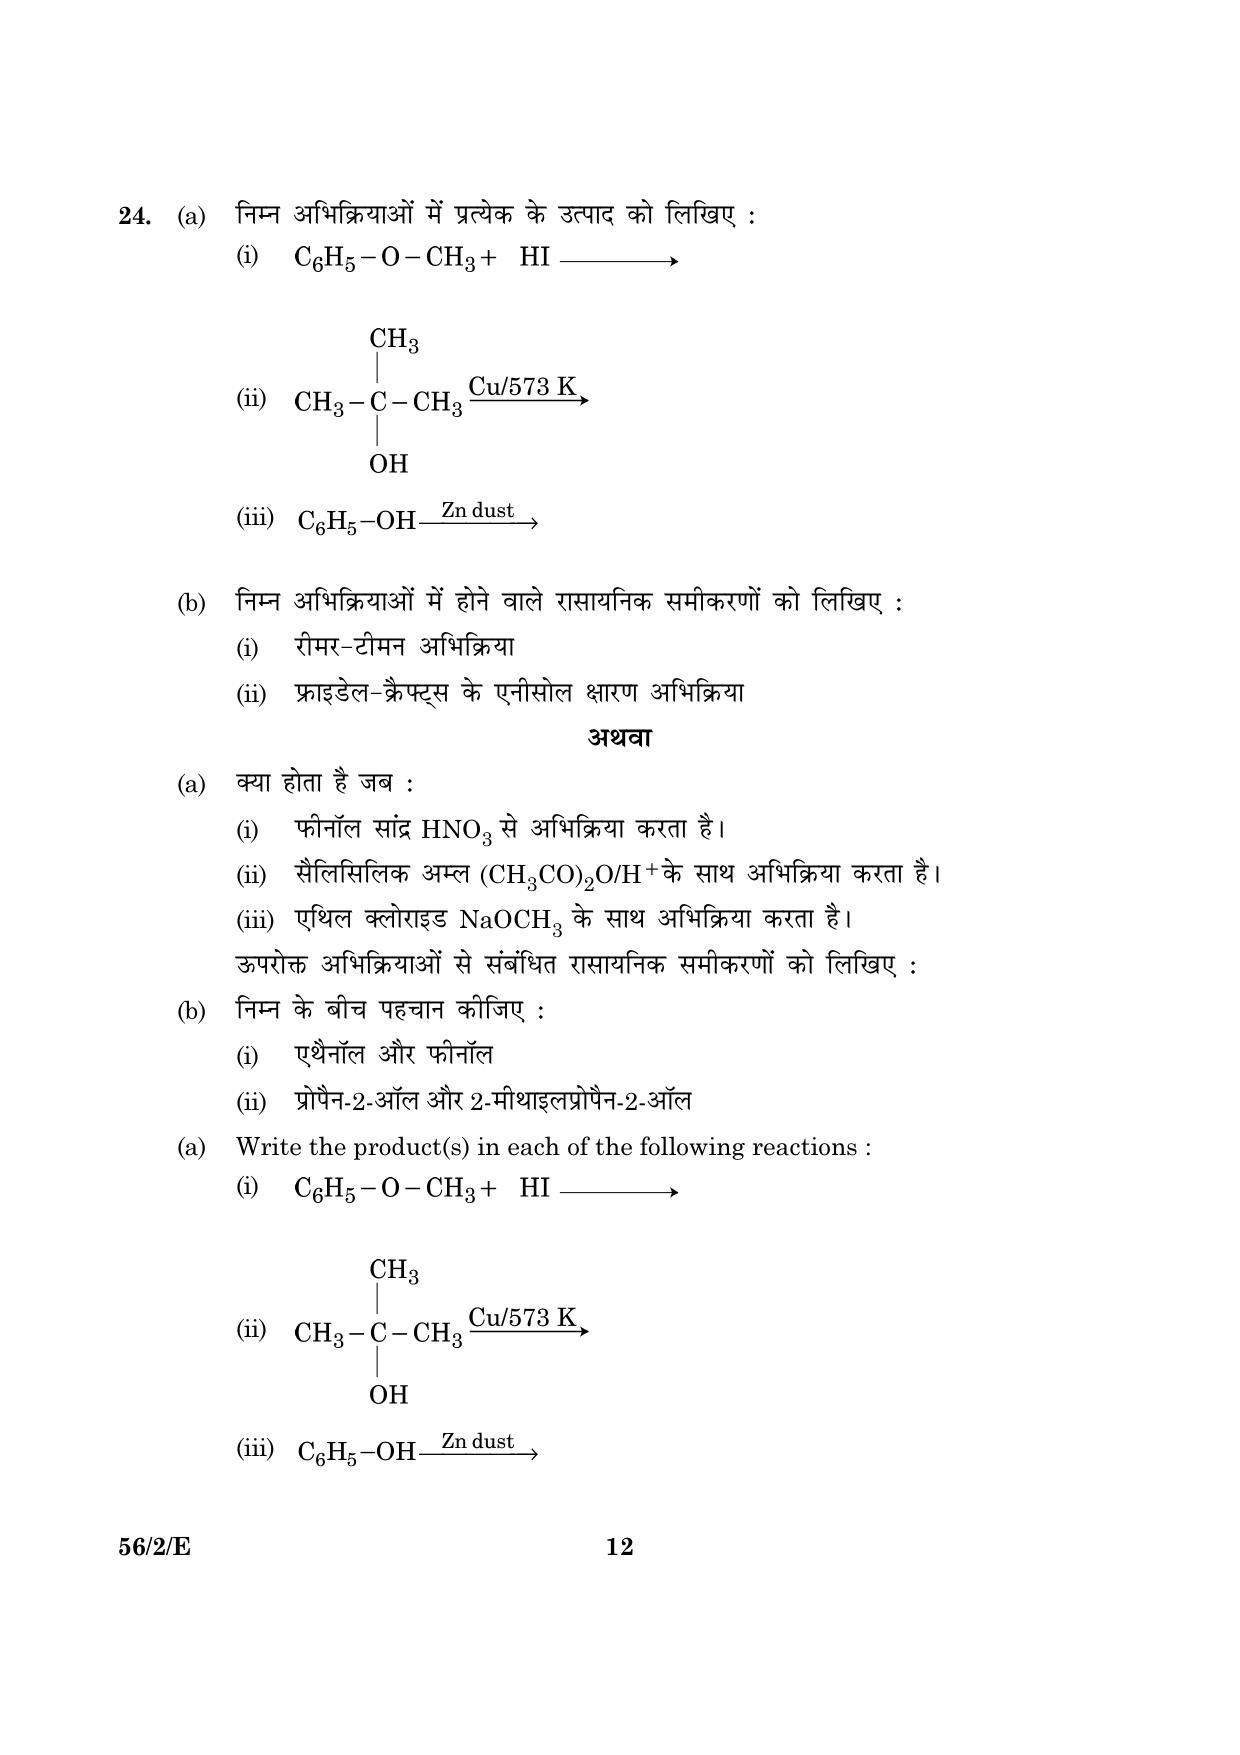 CBSE Class 12 056 Set 2 E Chemistry 2016 Question Paper - Page 12